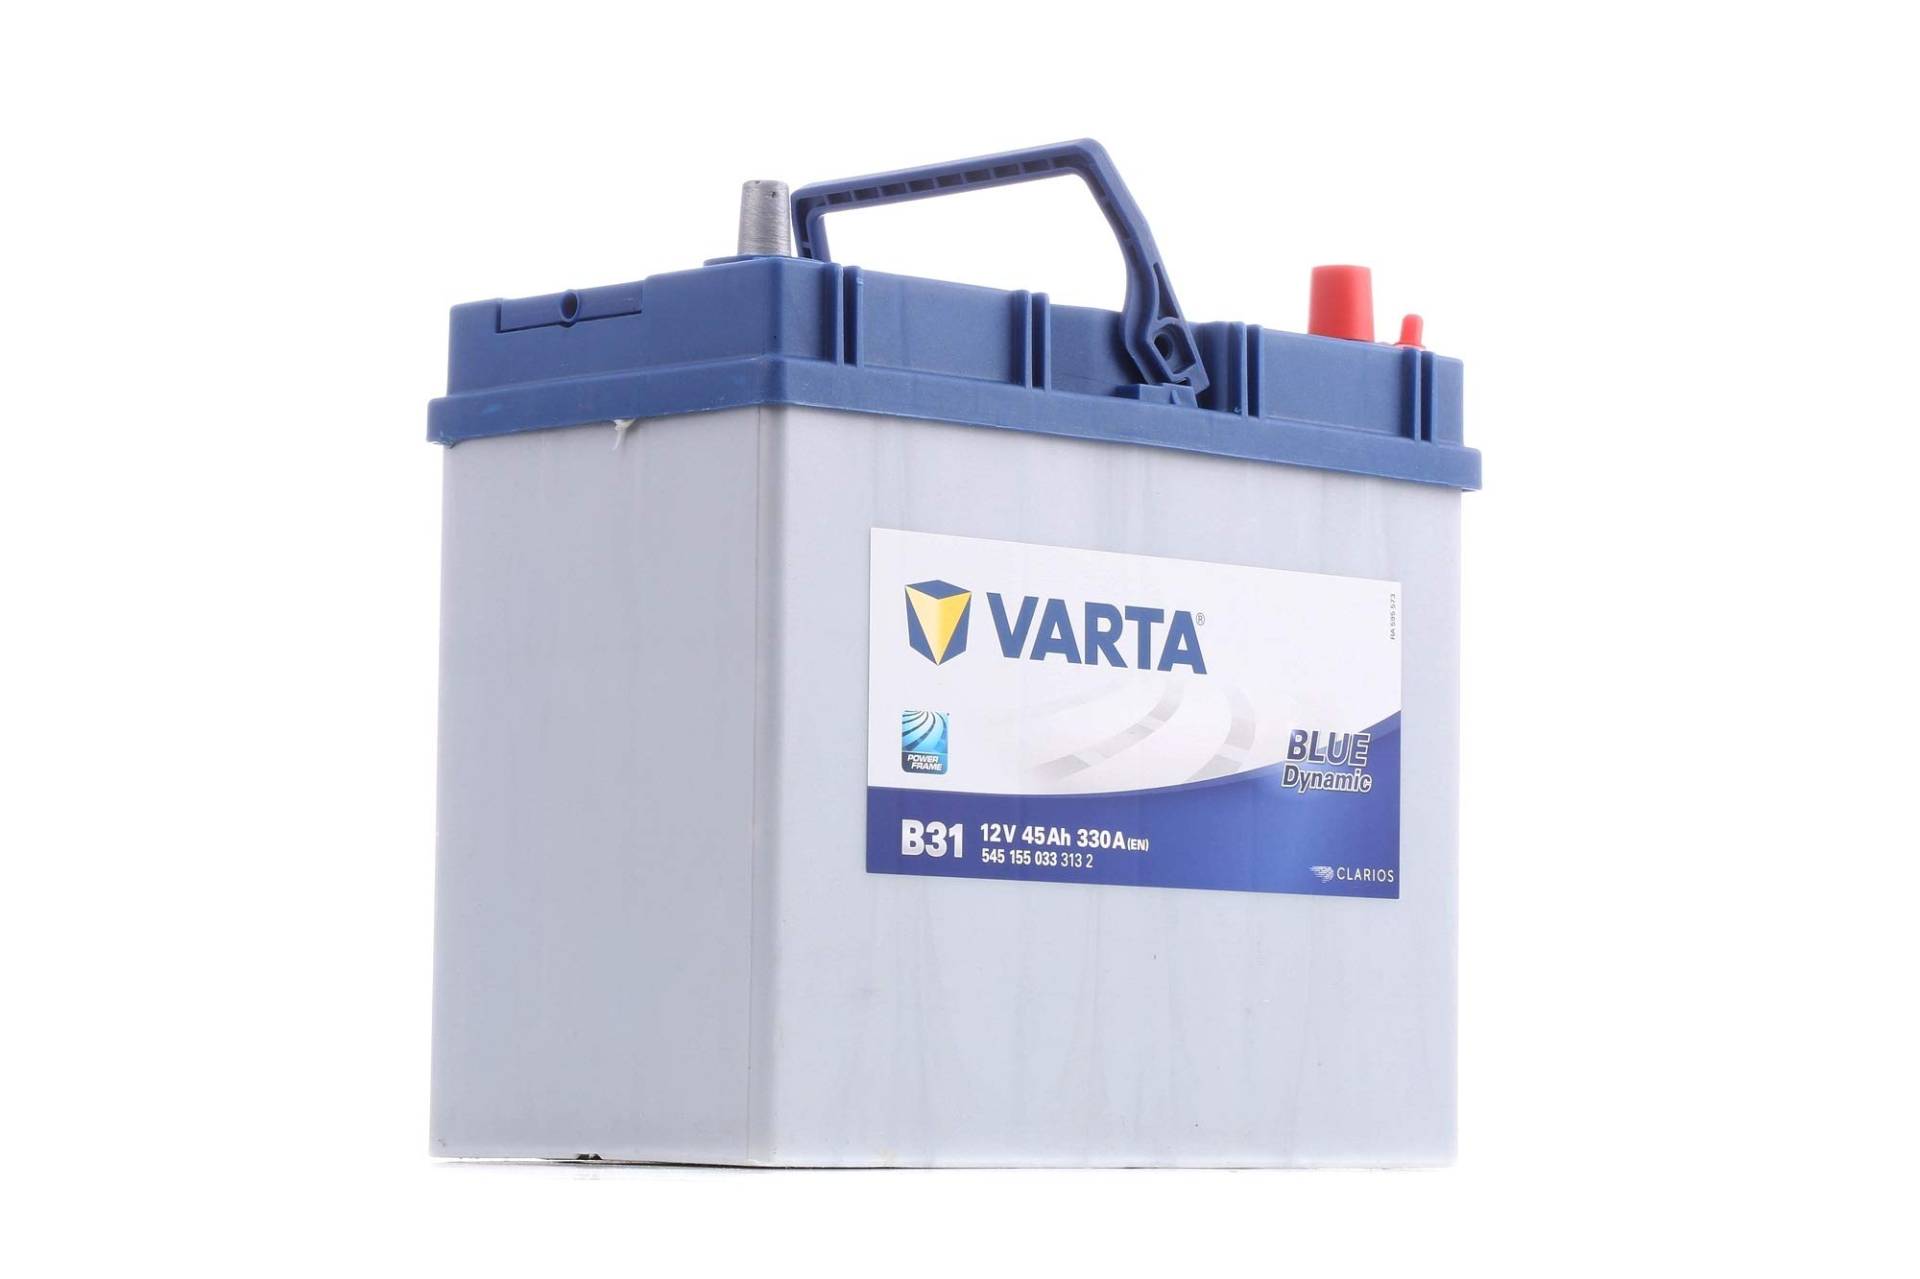 VARTA B31 Blue Dynamic / Autobatterie / Batterie 45Ah von Varta